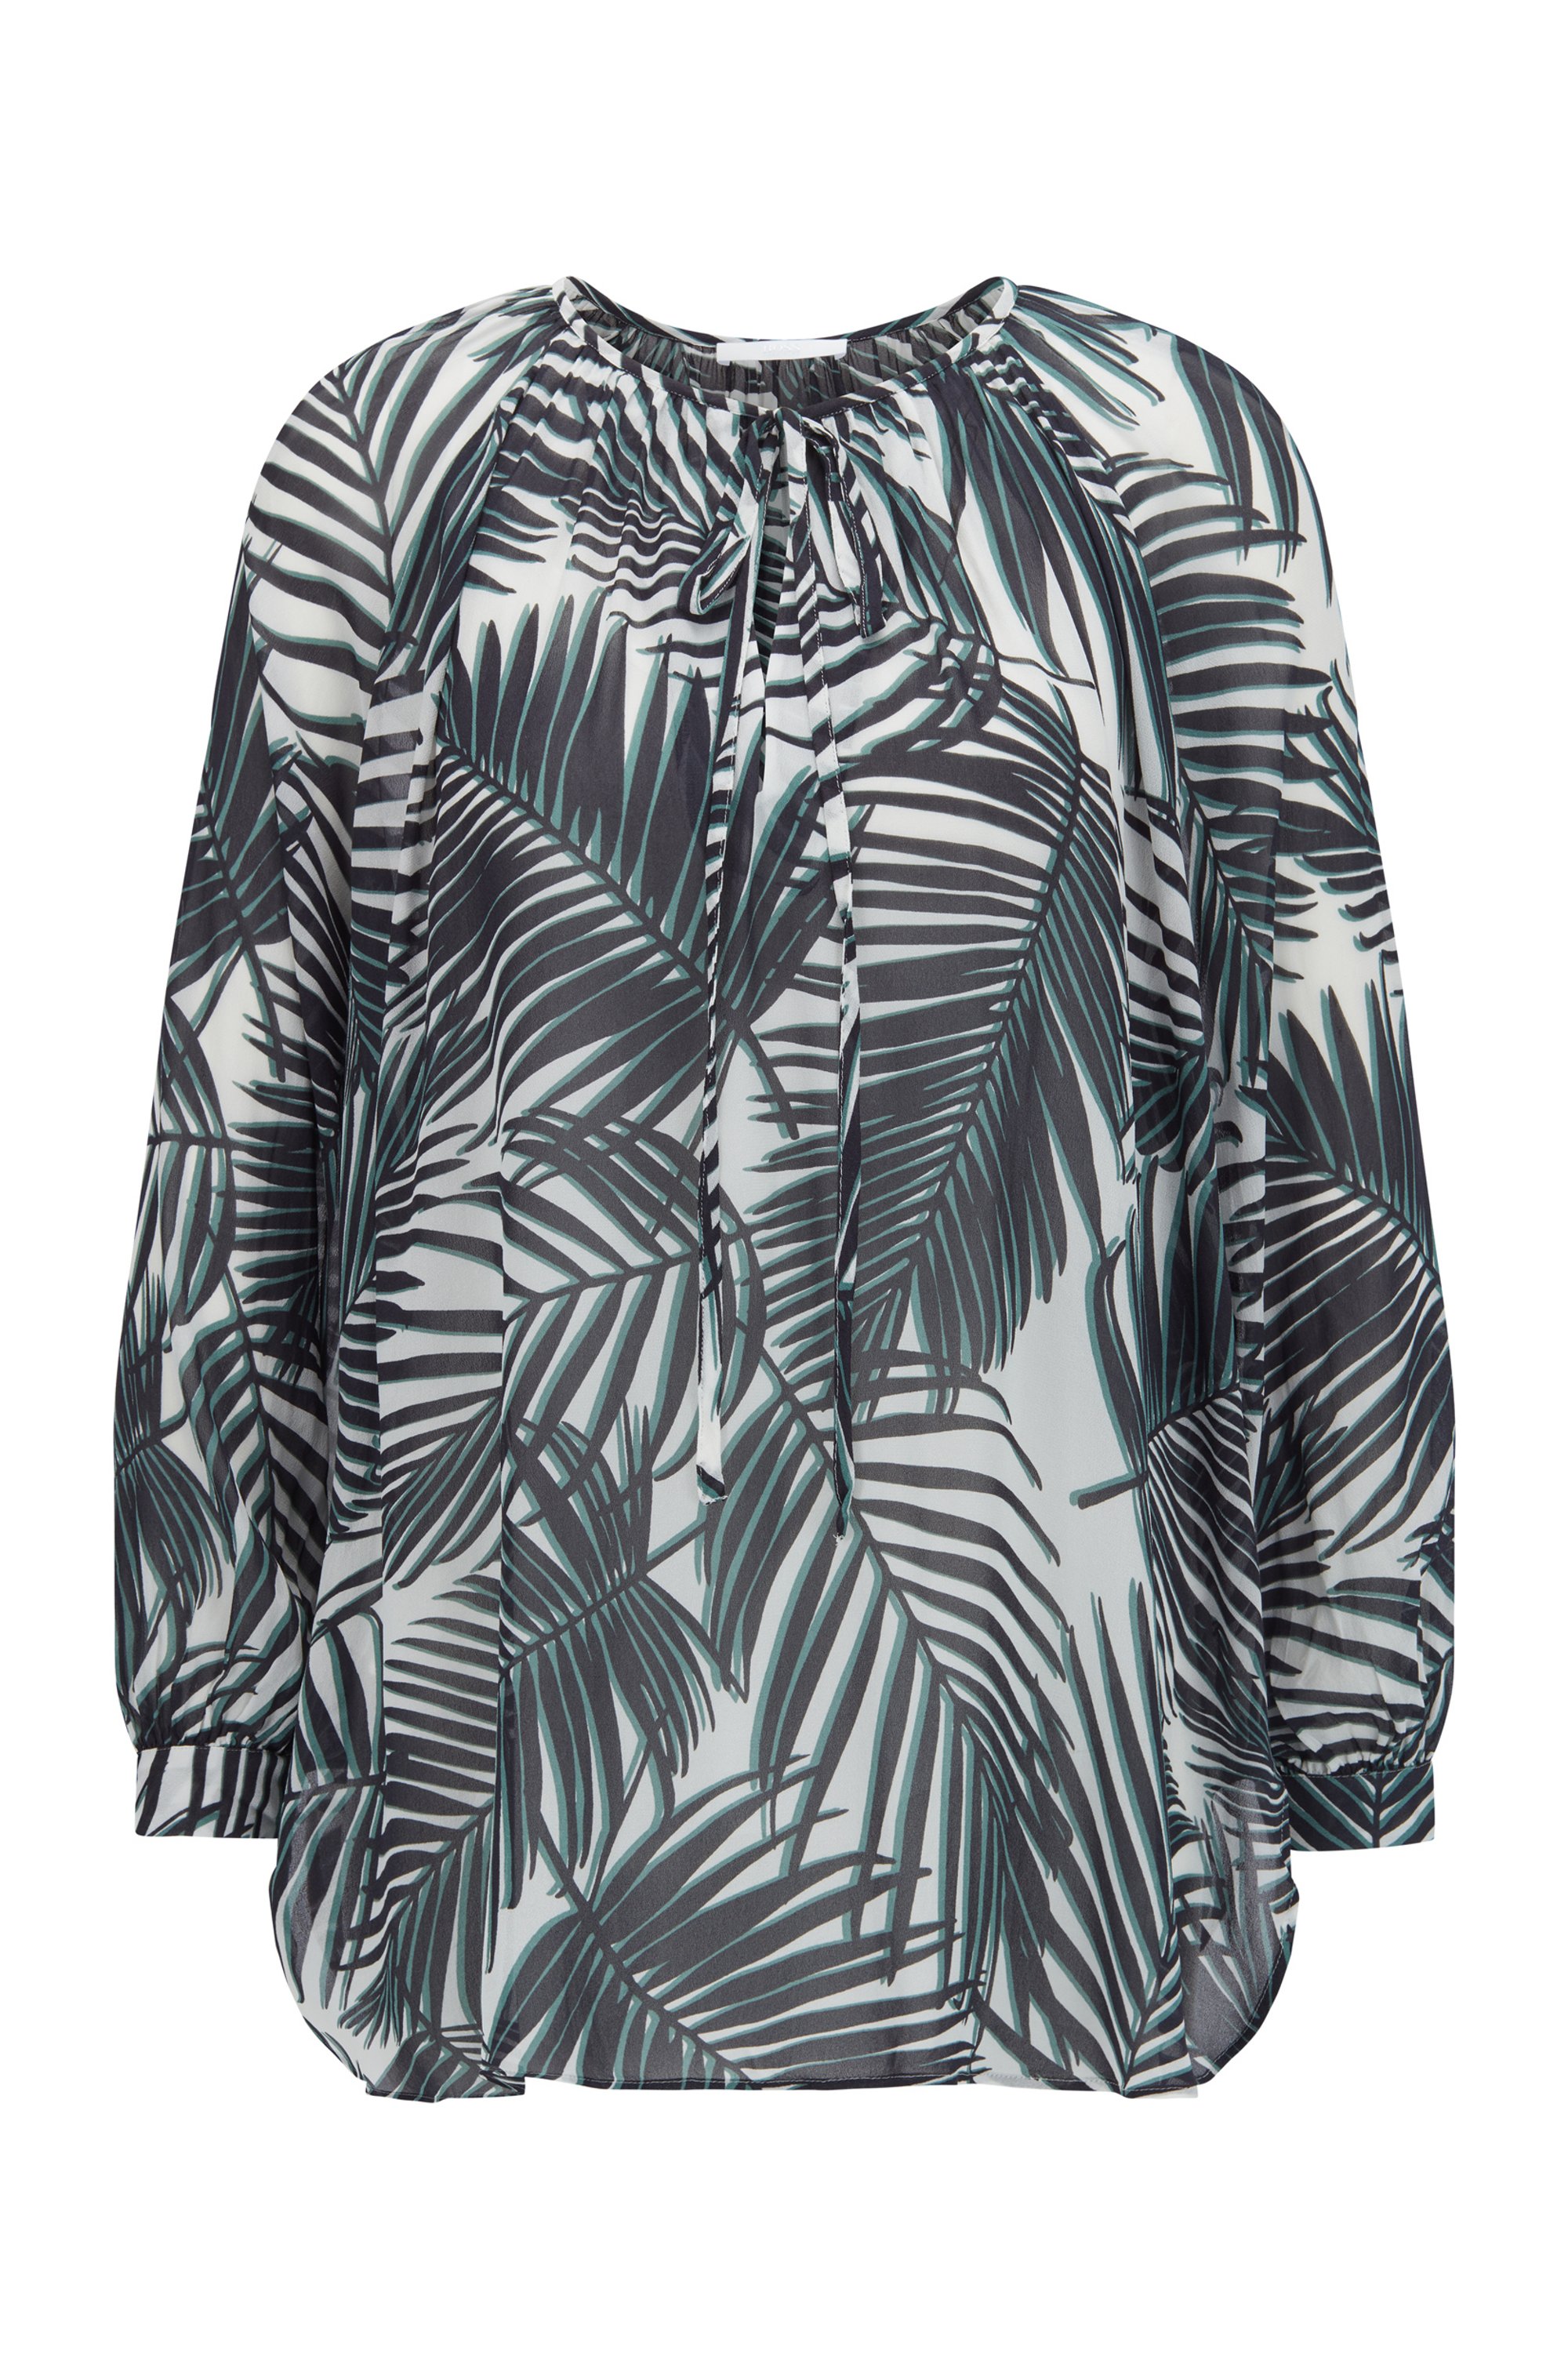 Voluminous blouse in leaf-print viscose, Patterned